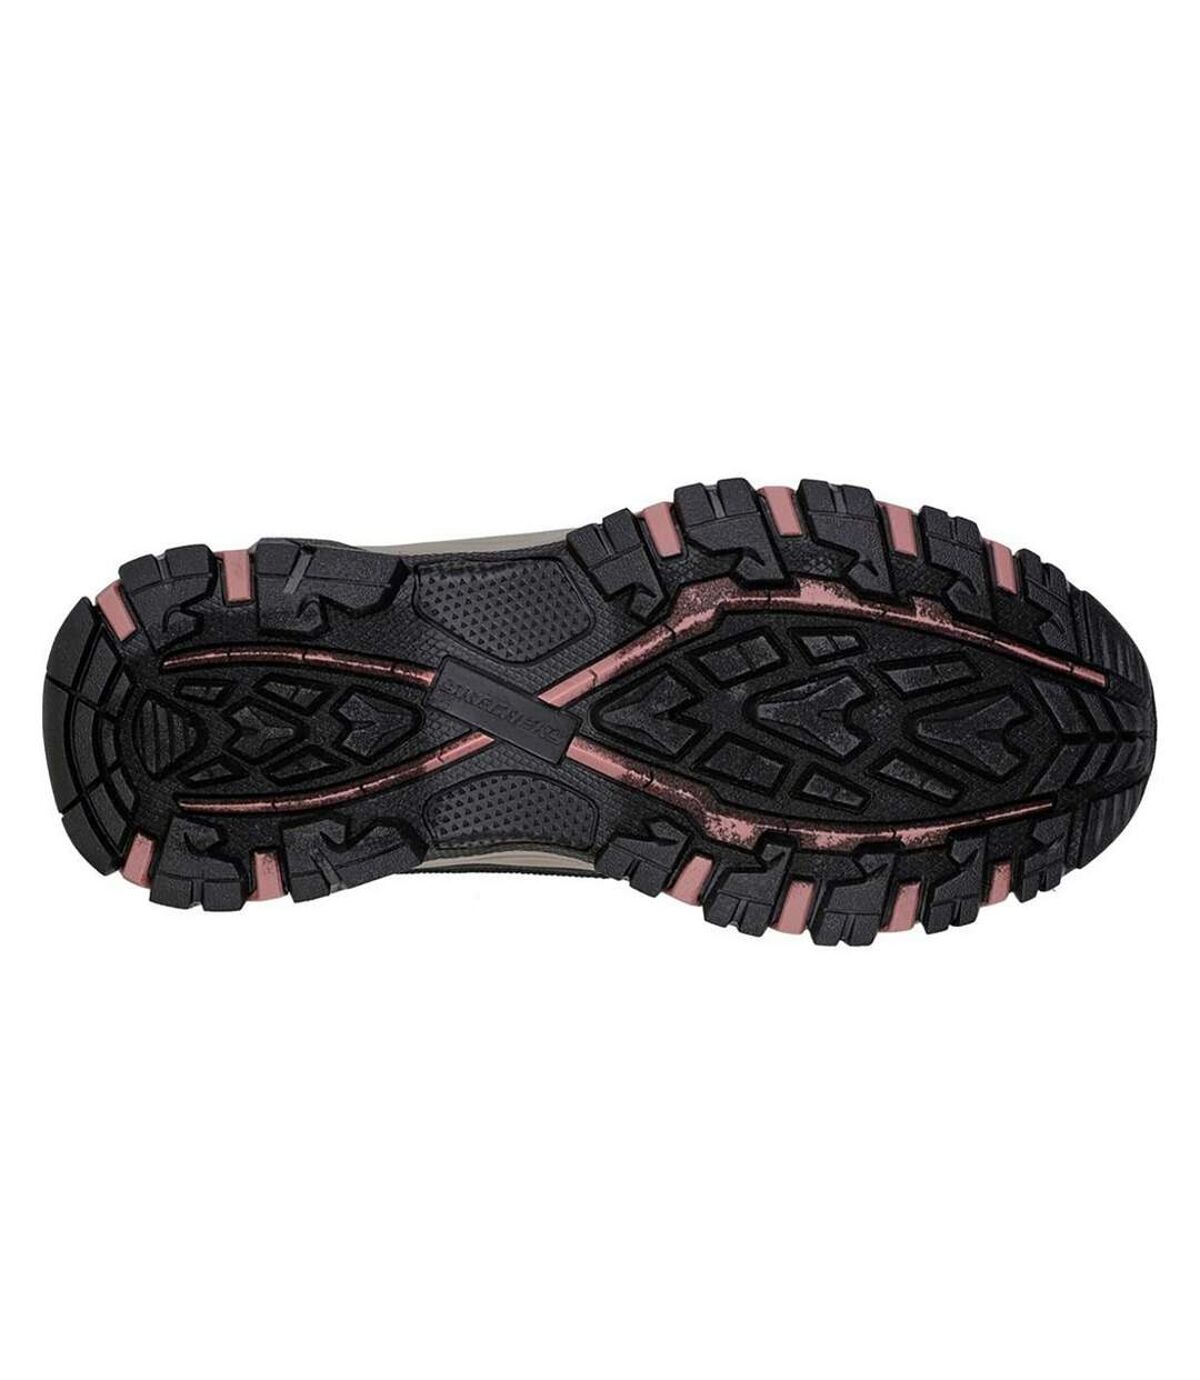 Skechers Womens/Ladies Selmen Relaxed Fit Hiking Boots (Chocolate Brown) - UTFS8558